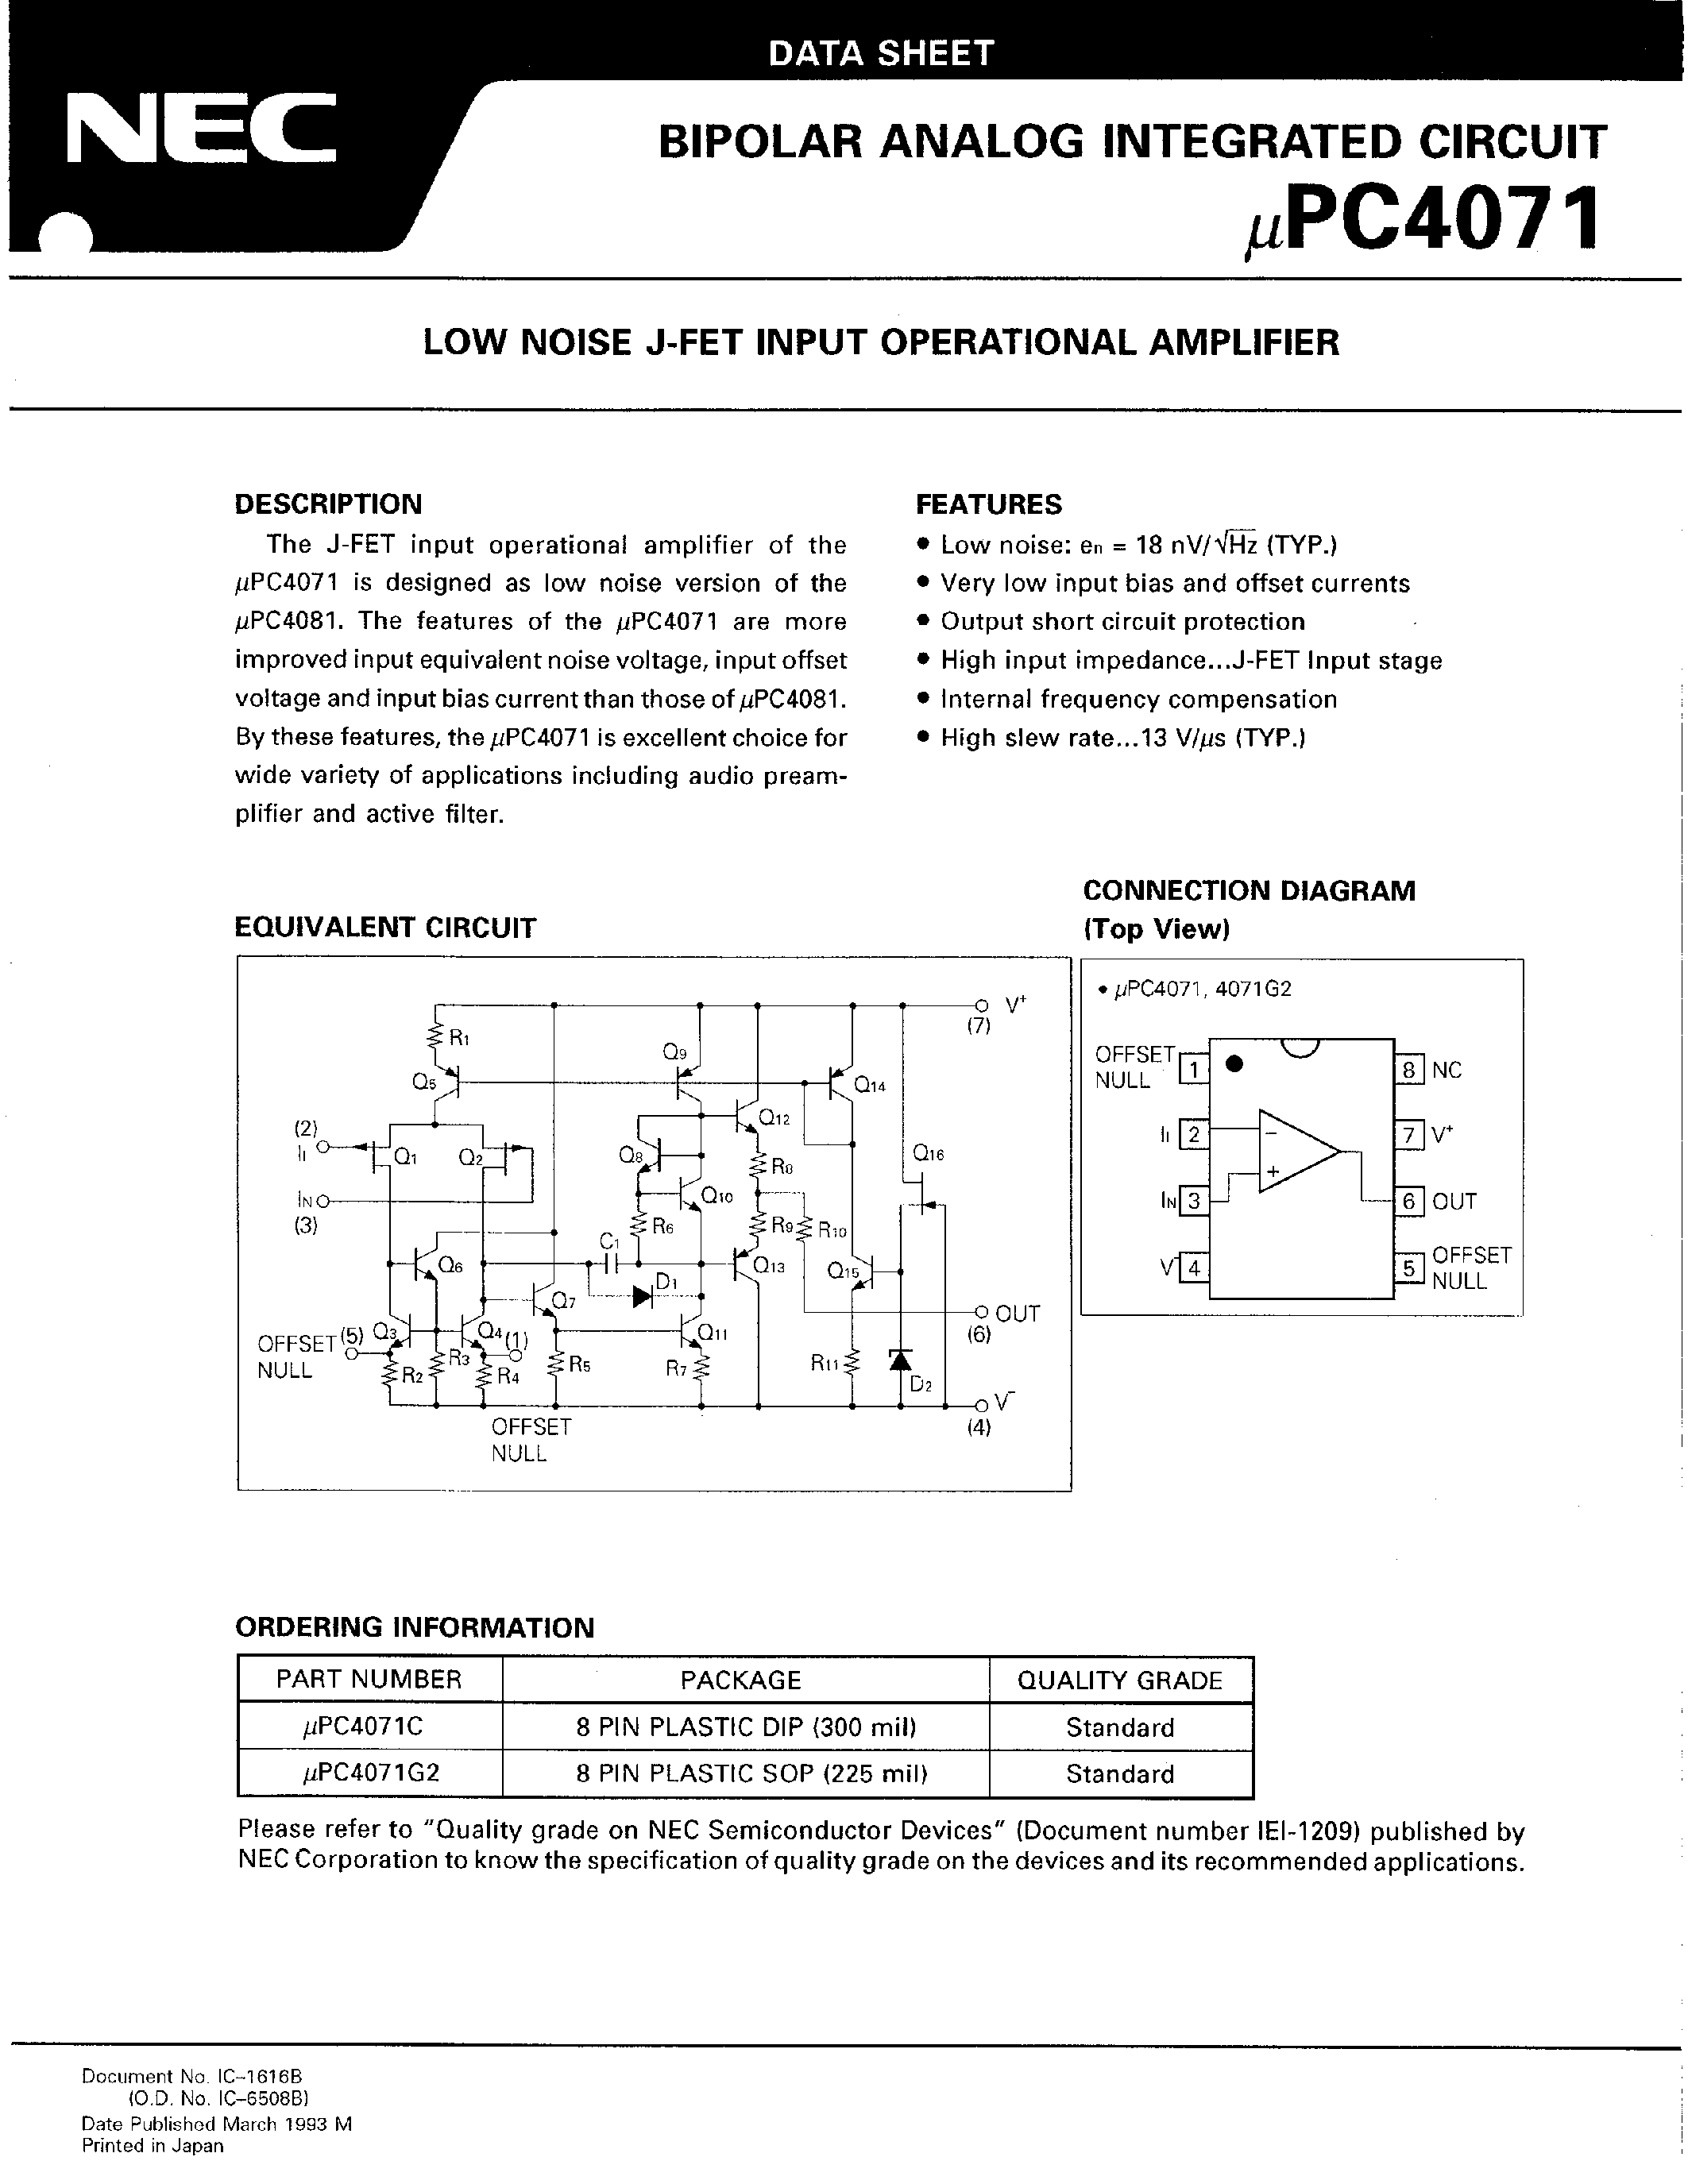 Datasheet UPC4071G2 - LOW NOISE J-FET INPUT OPERATIONAL AMPLIFIER page 1